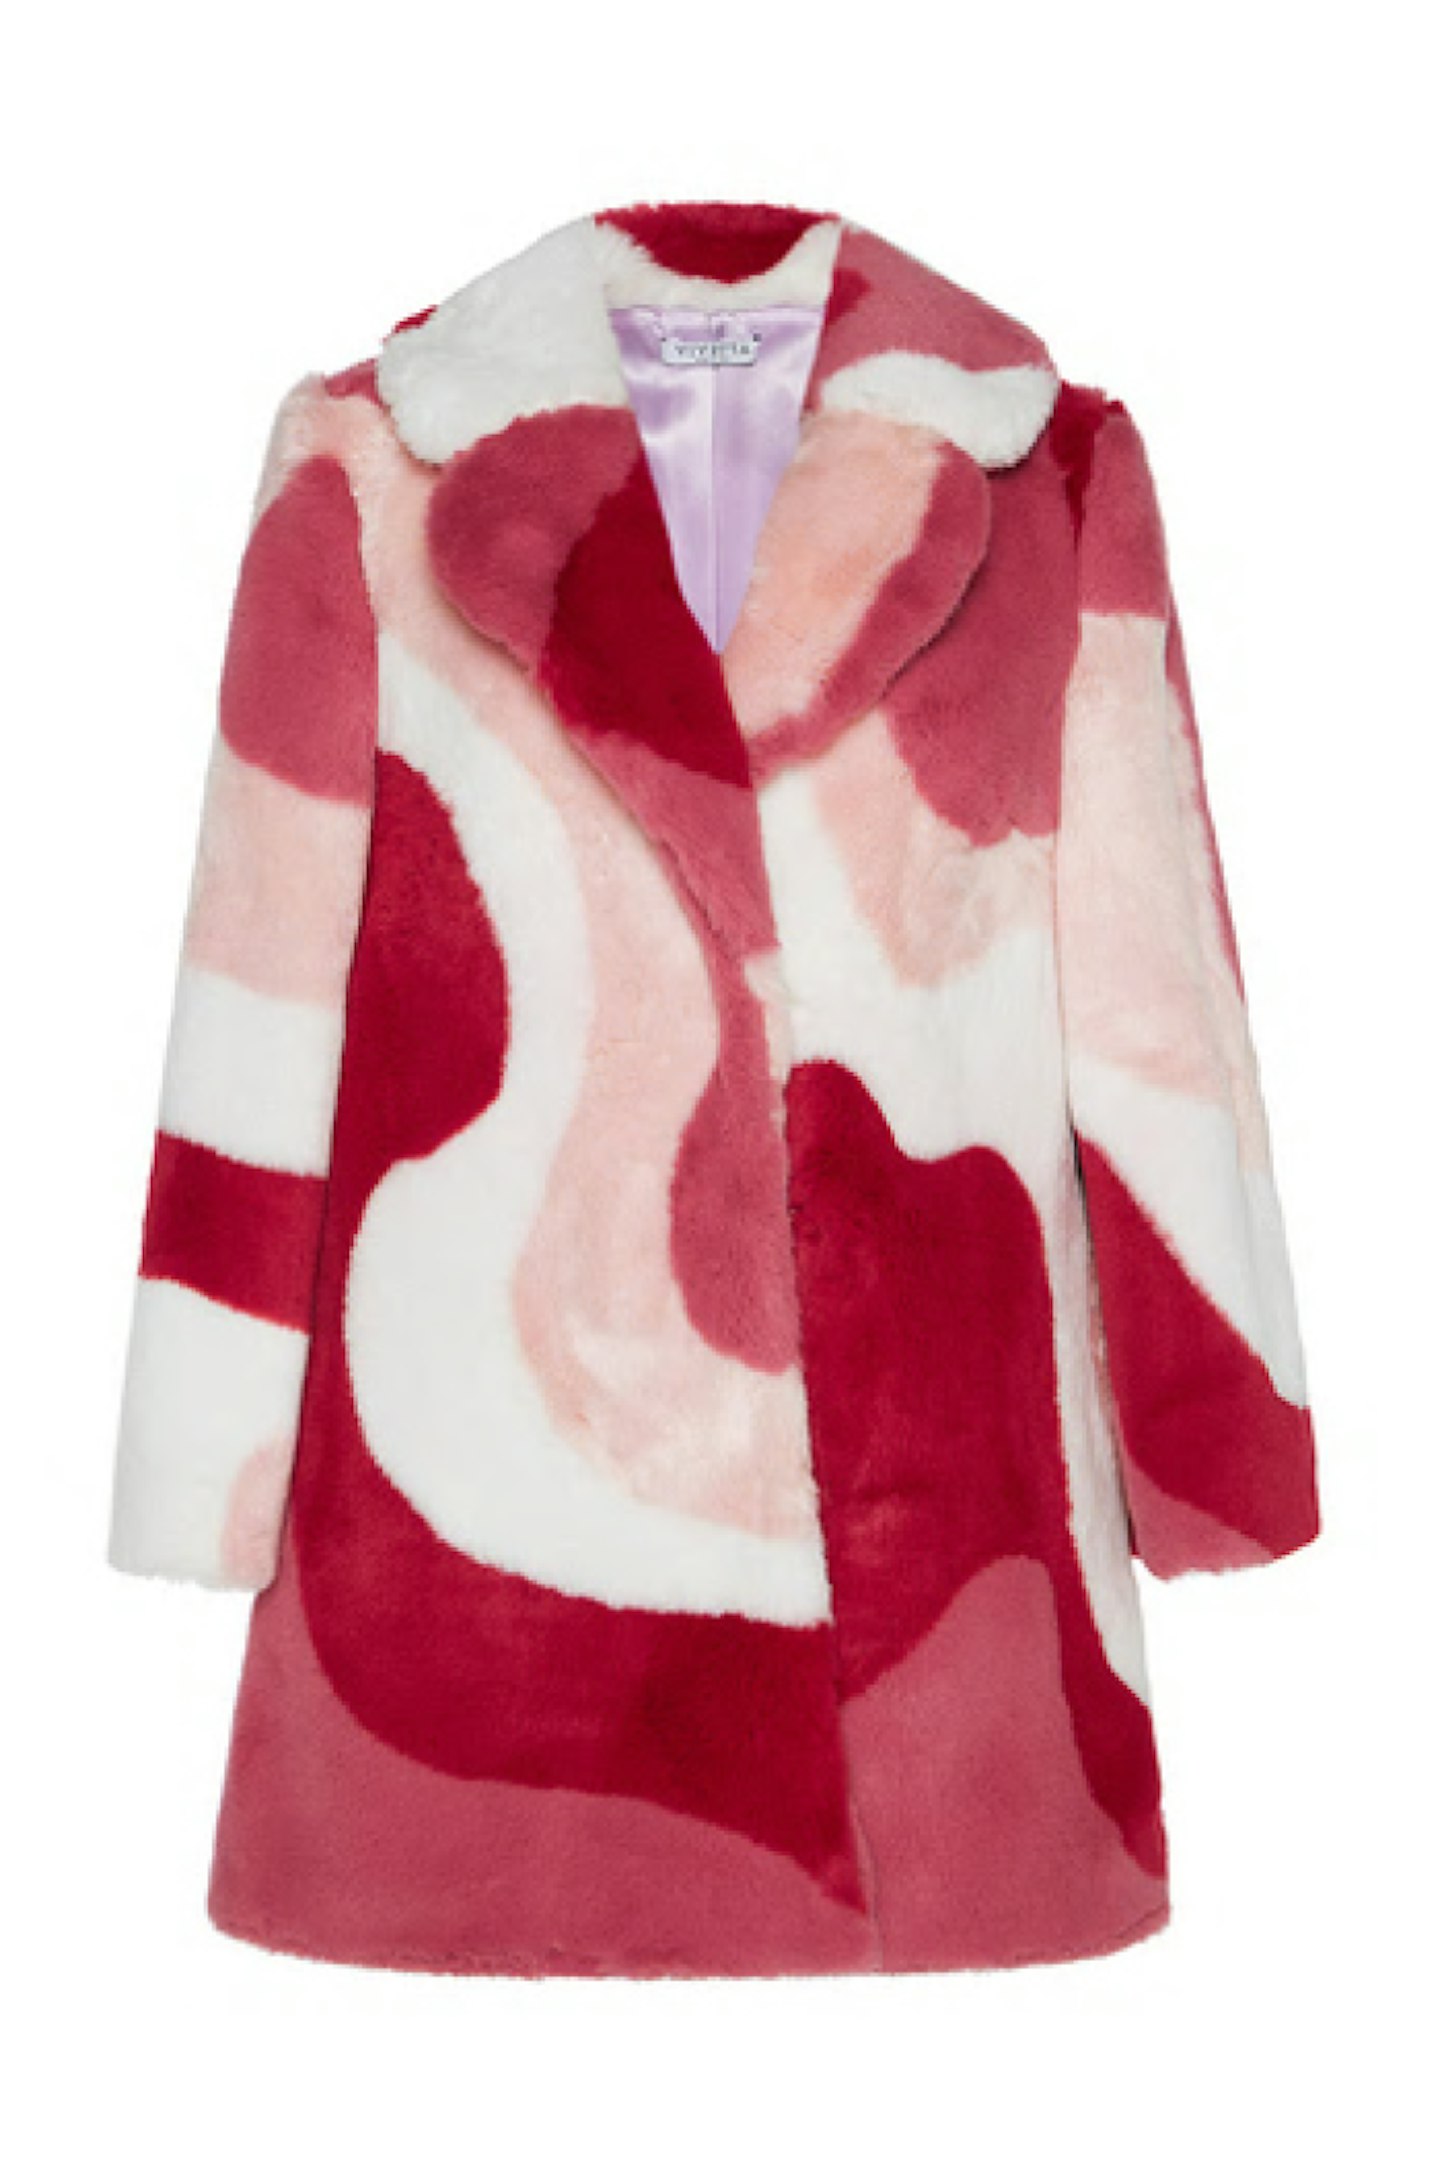 Vivetta Faux Fur Coat, £642.00